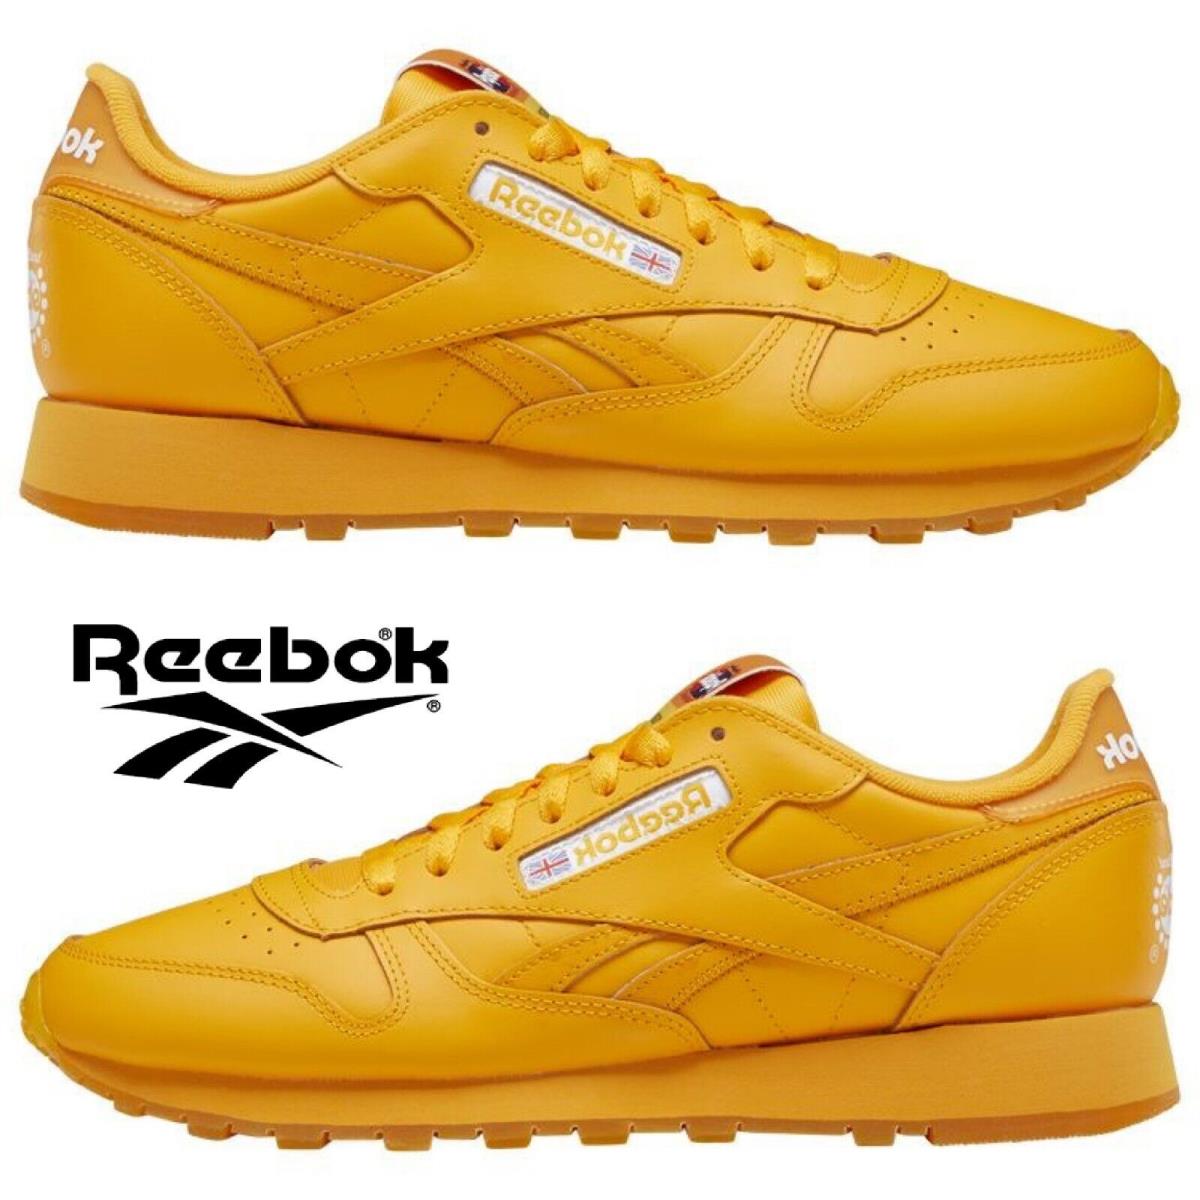 Reebok Classic Leather Popsicle Men`s Sneakers Running Training Shoes Casual - Orange, Manufacturer: Orange/Orange